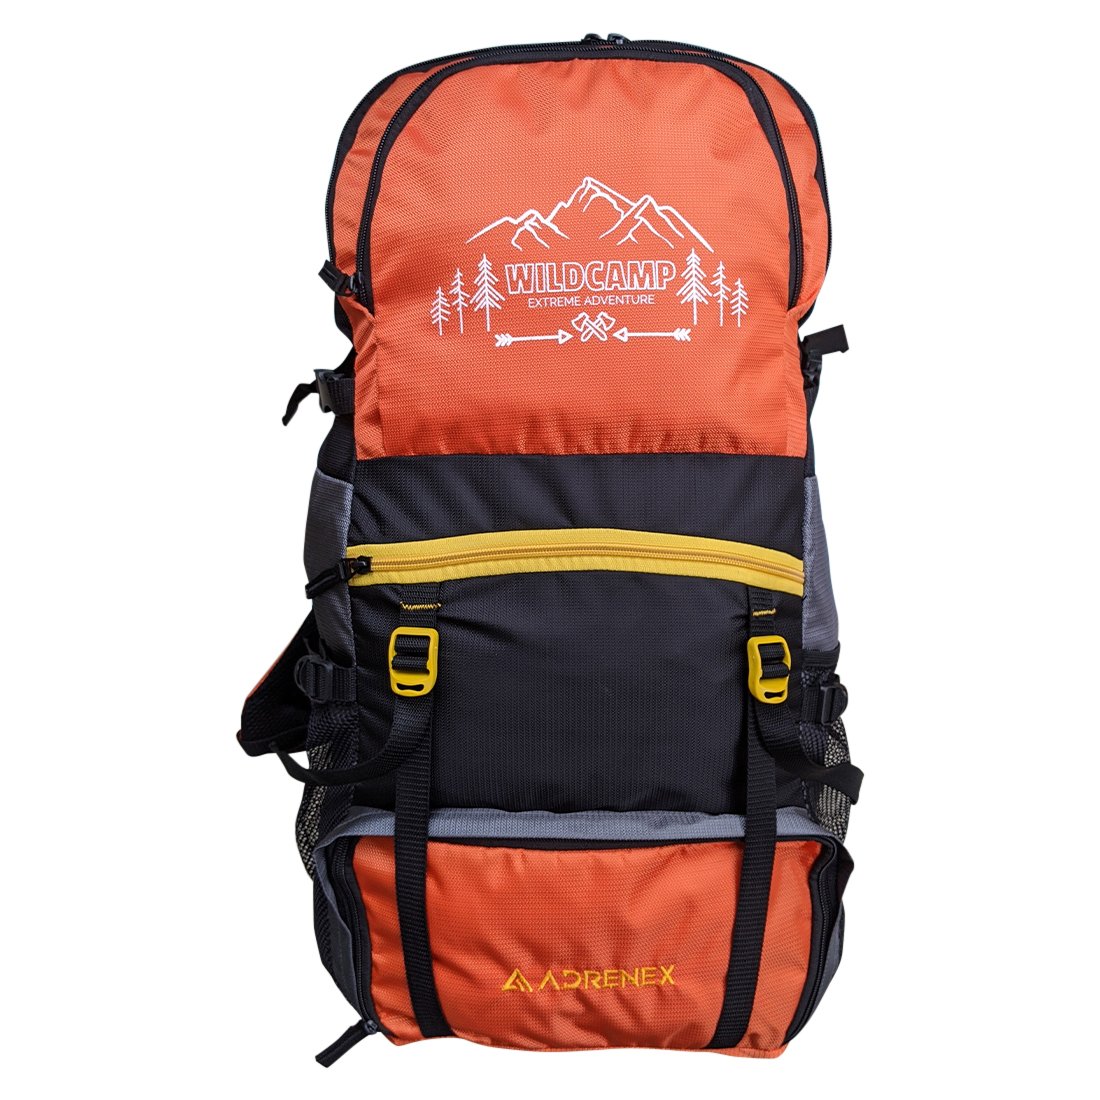 Wildcamp Travel Backpack - 55 Litre - Orange